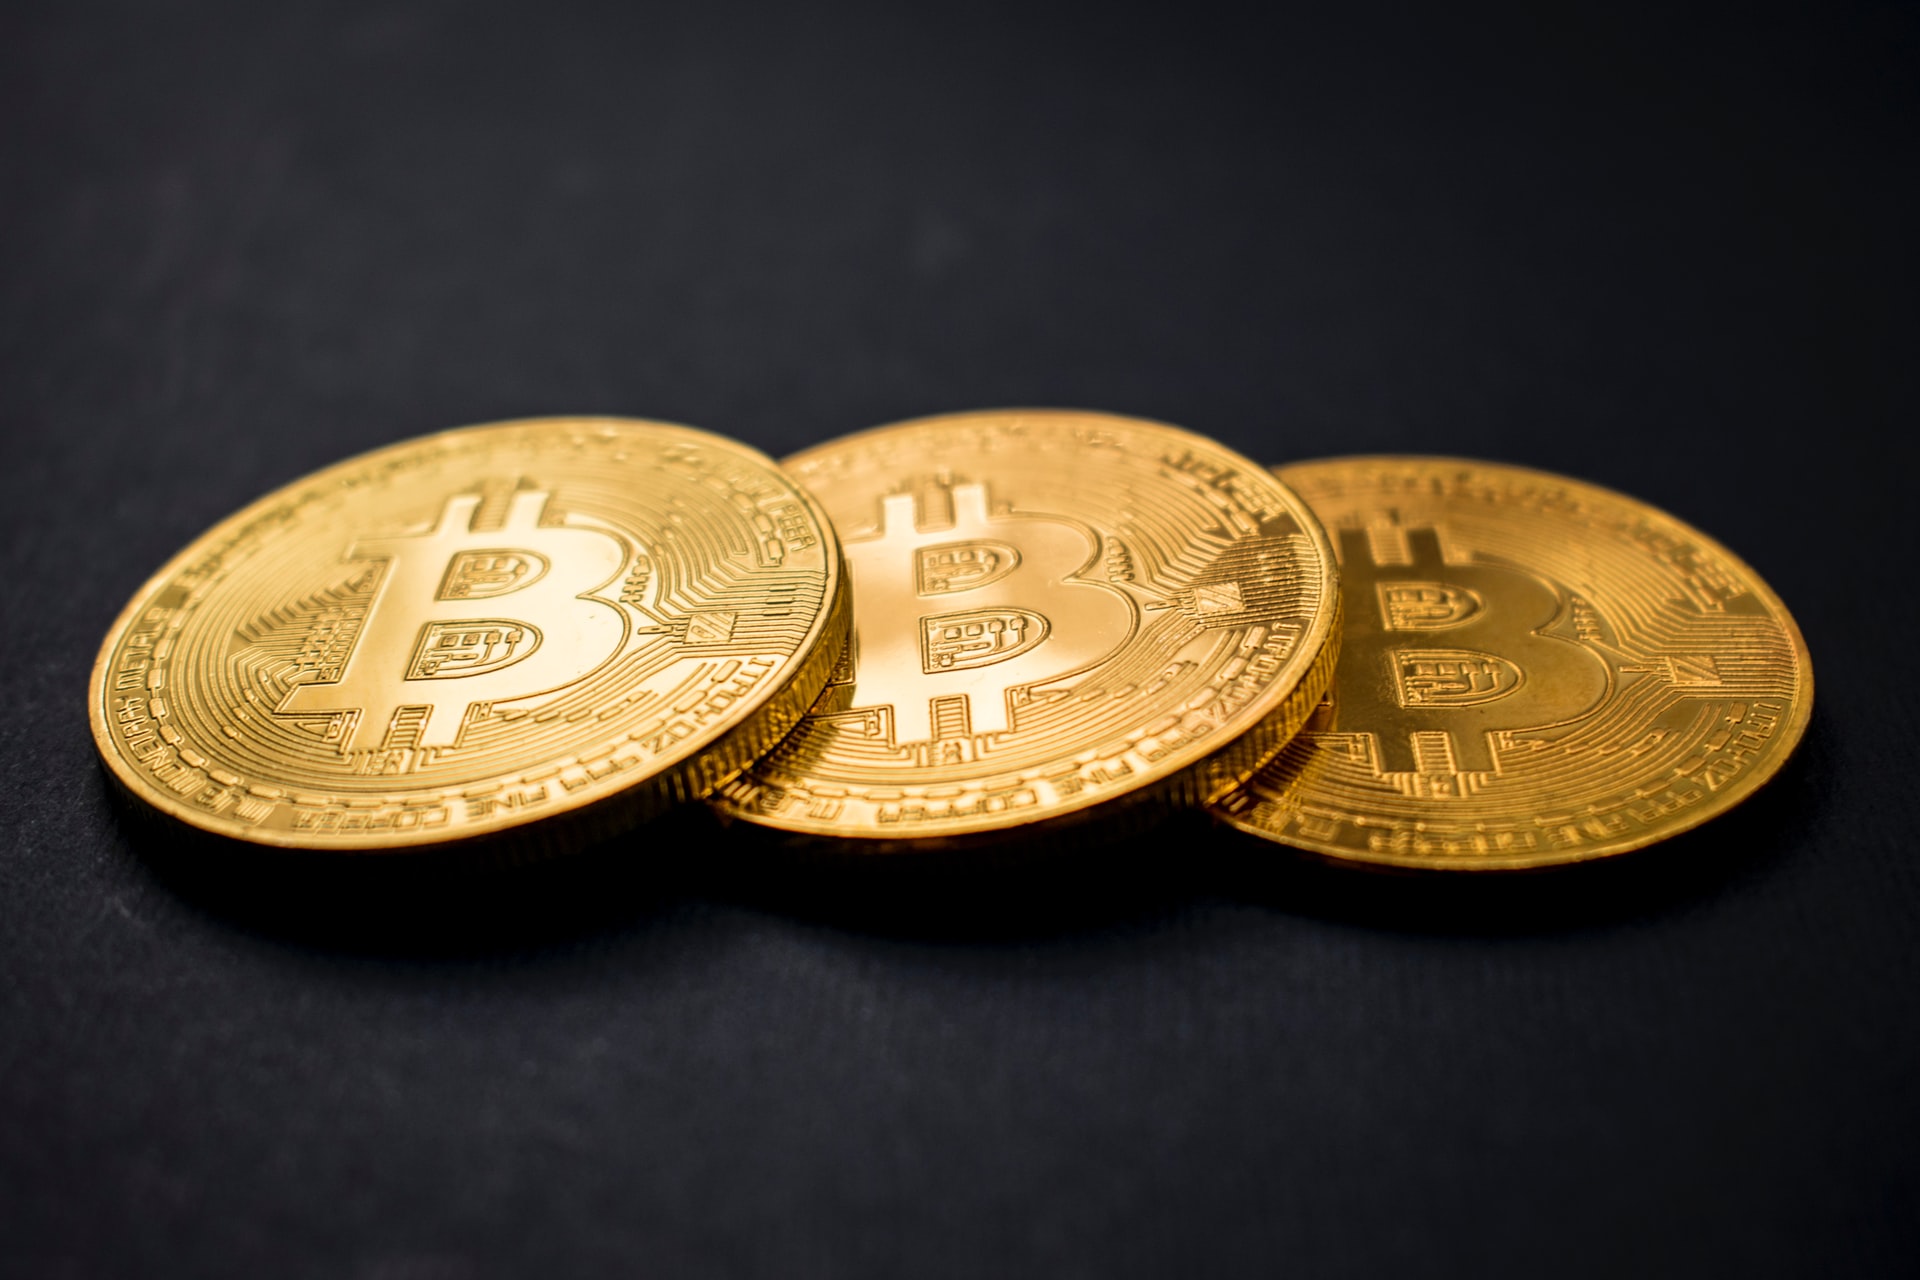 An image of bitcoins